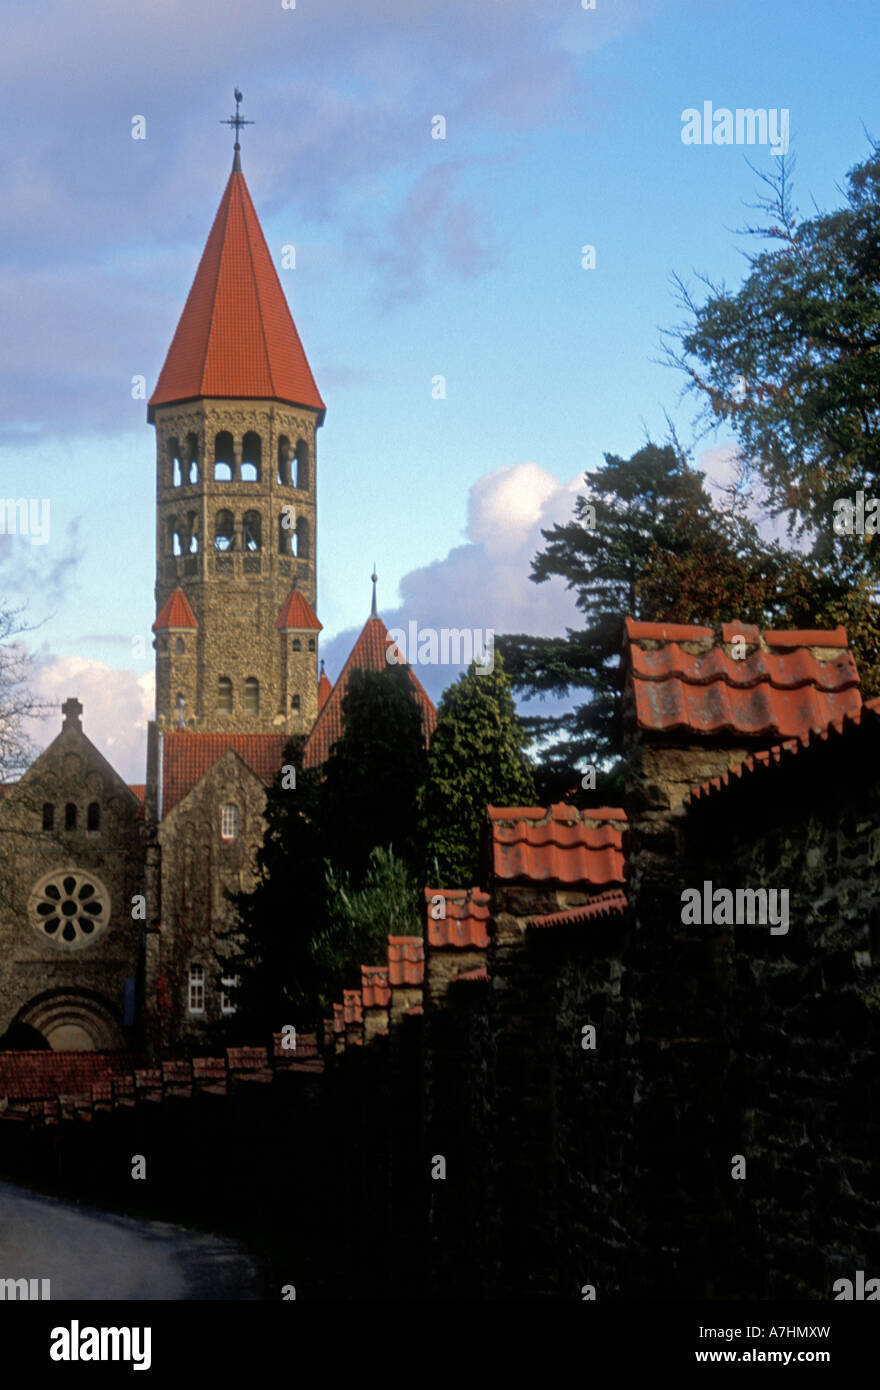 Saint-maurice et l'abbaye de saint maur clervaux diekirch luxembourg europe Banque D'Images